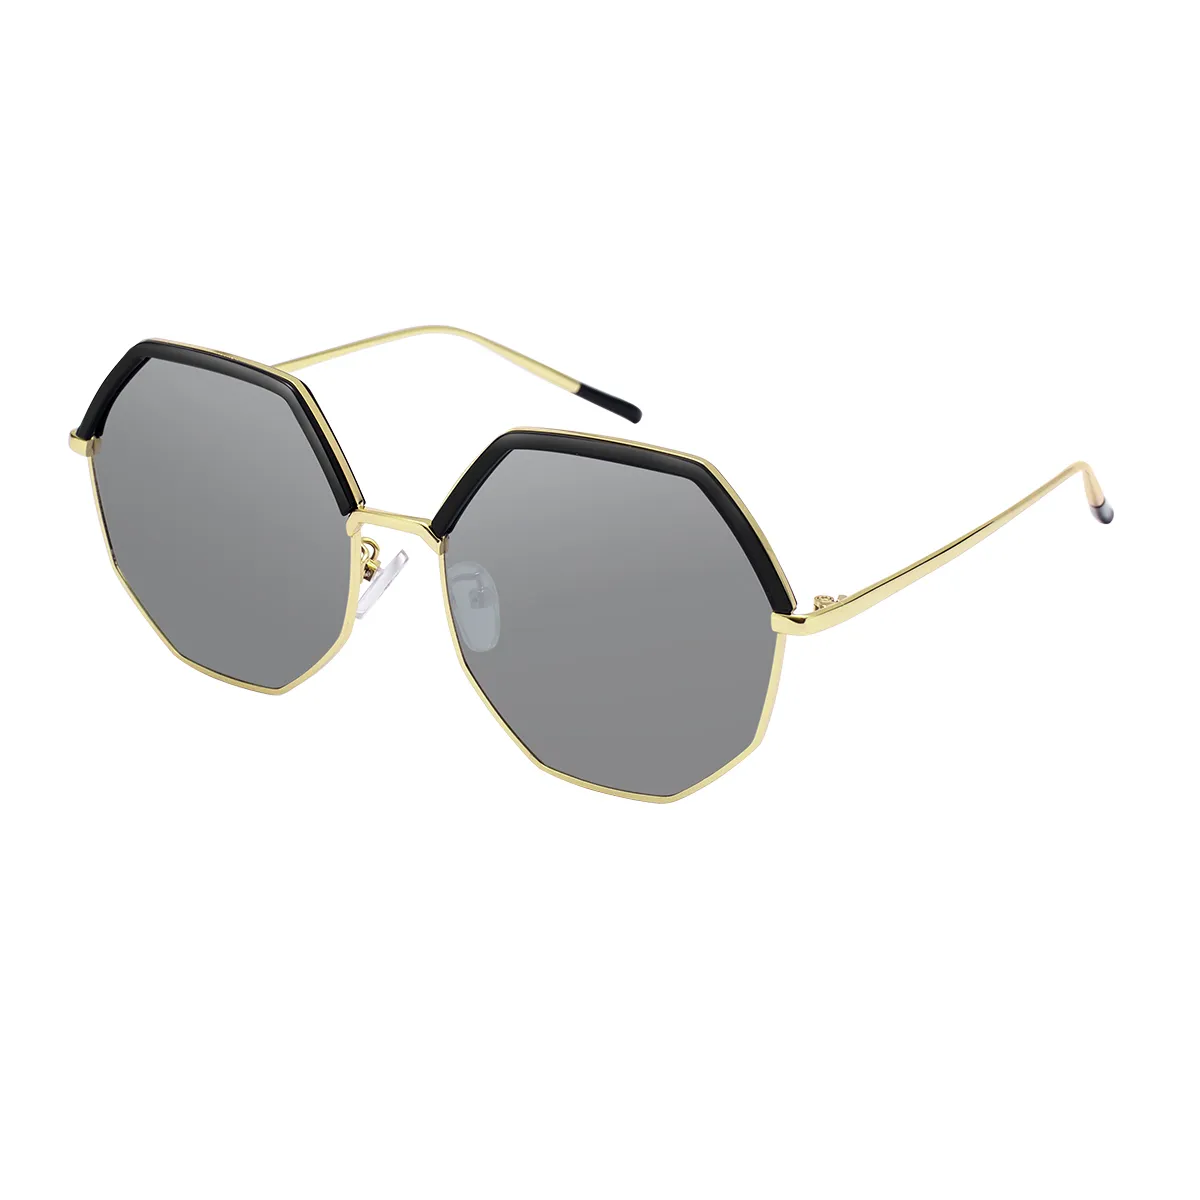 Di - Geometric Gold/Grey Sunglasses for Women